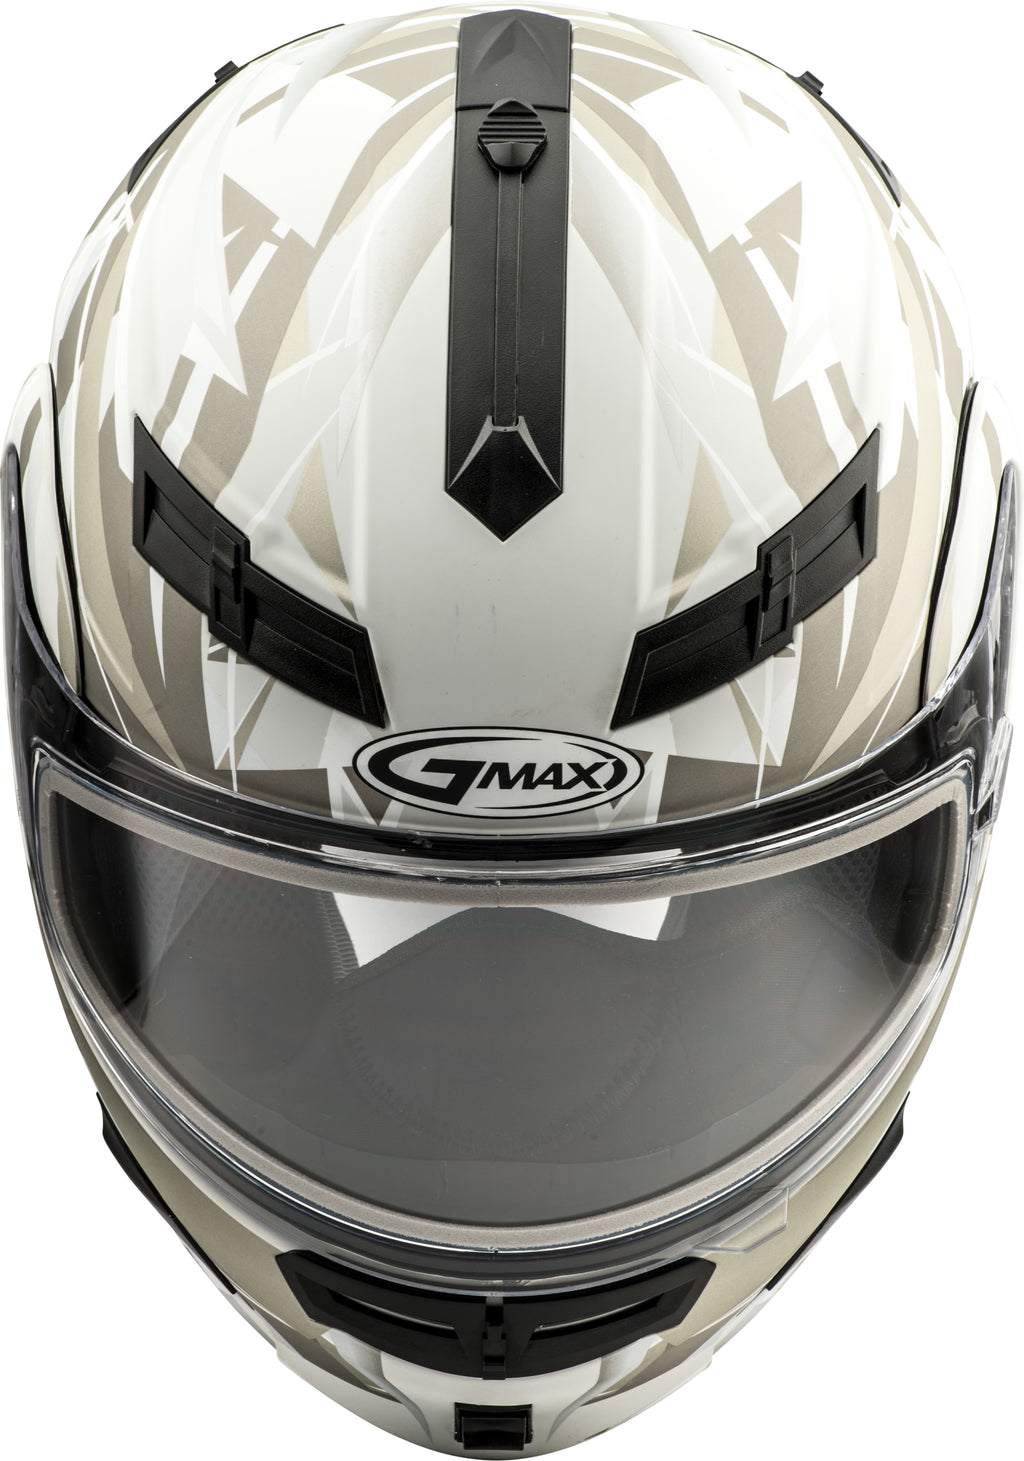 Gm 54s Scribe Modular Helmet Matte White/Grey 2x